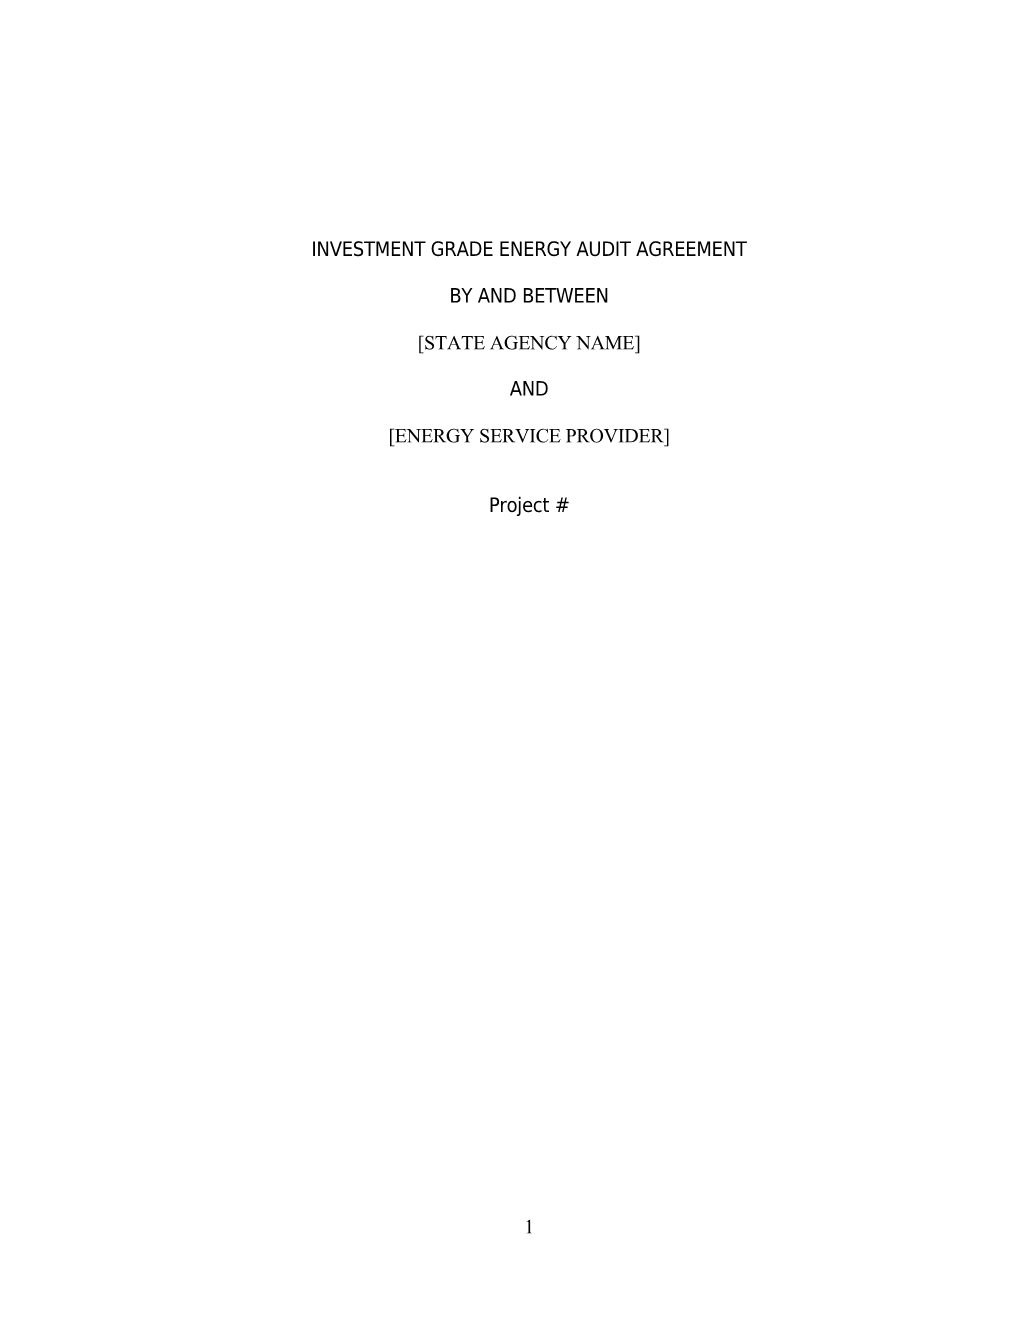 Investment Grade Energy Audit Agreement